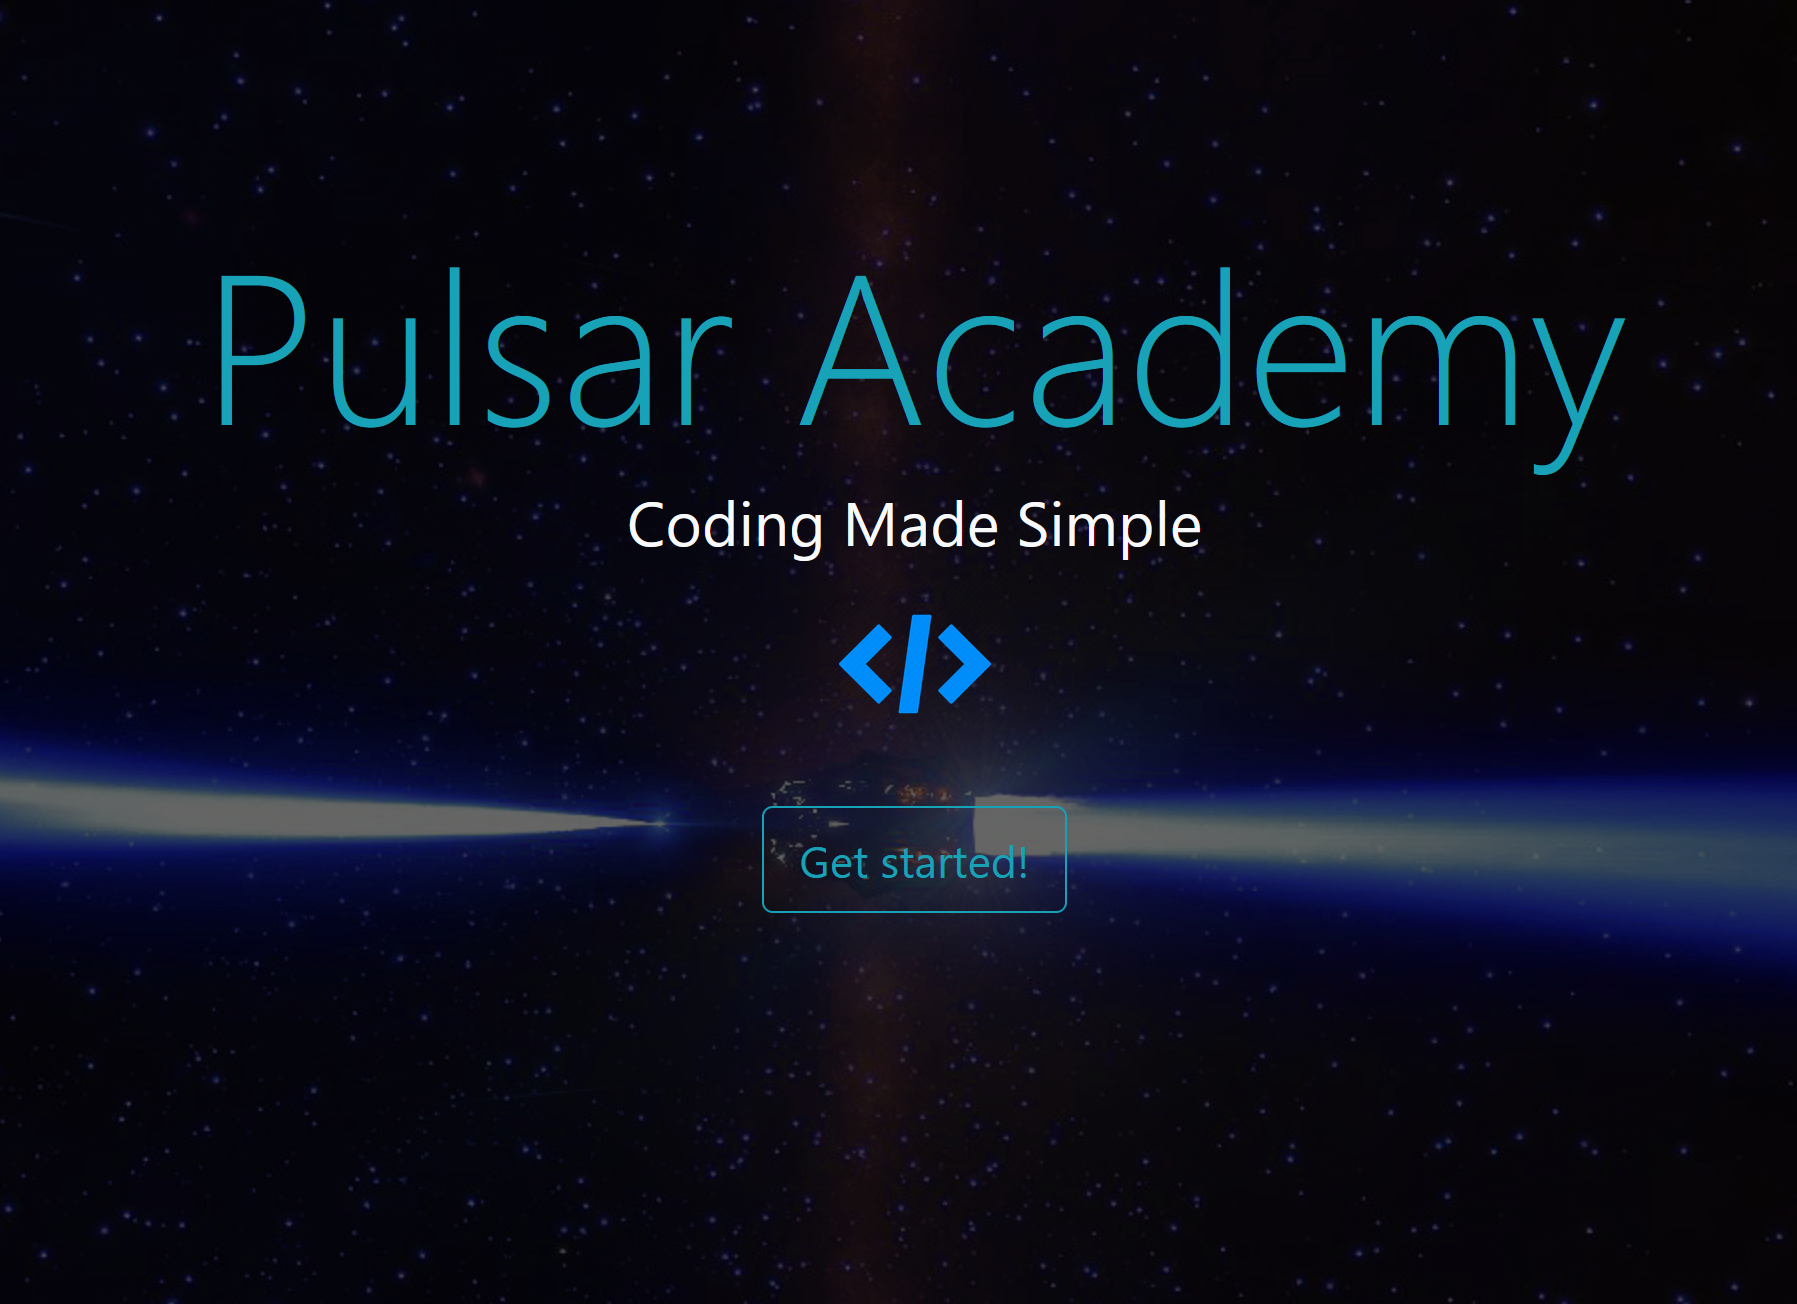 Pulsar Academy